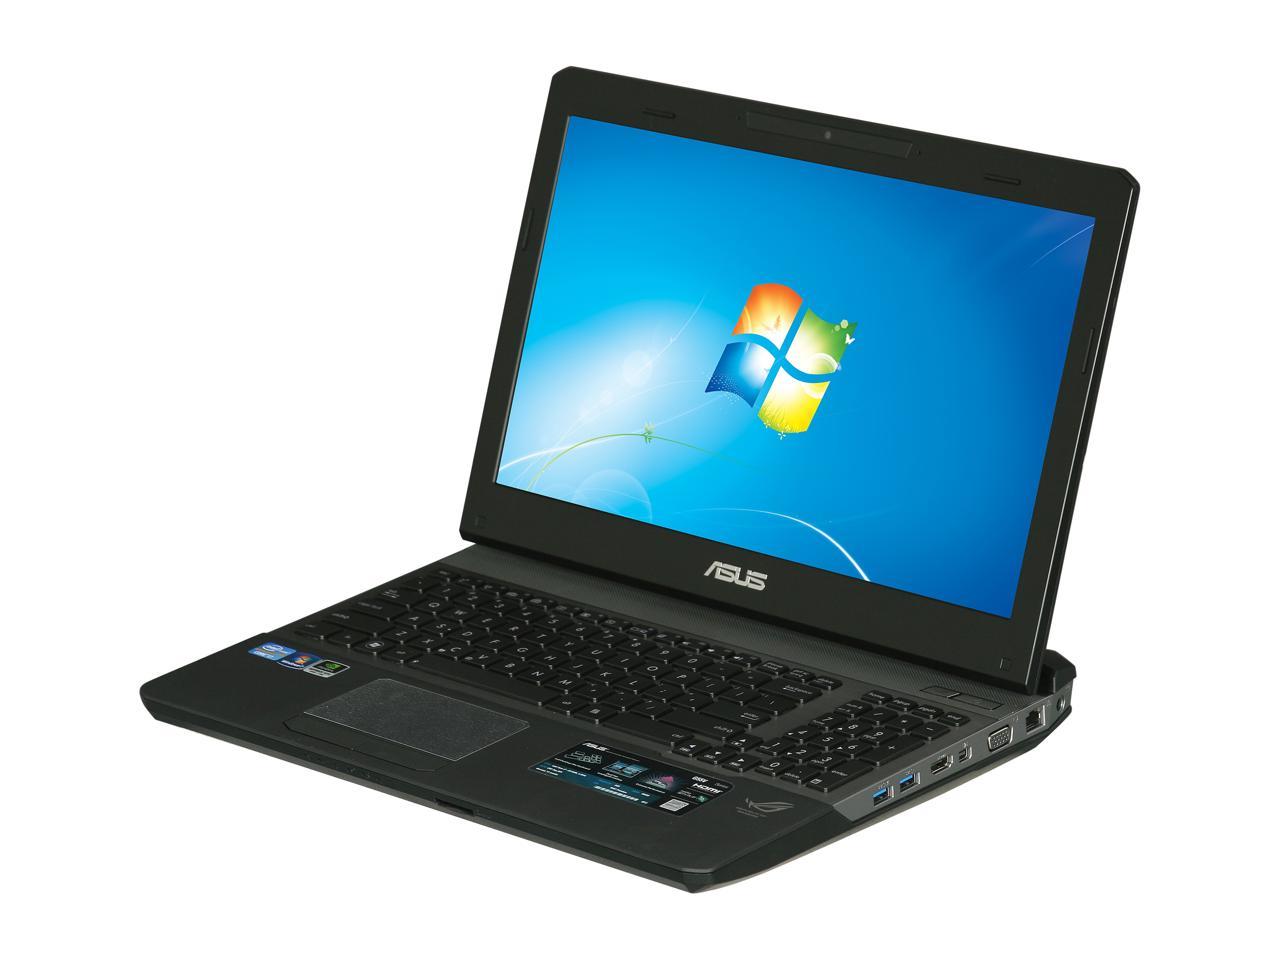 ASUS Laptop Intel Core i7 3rd Gen 3610QM (2.30GHz) 8GB Memory 